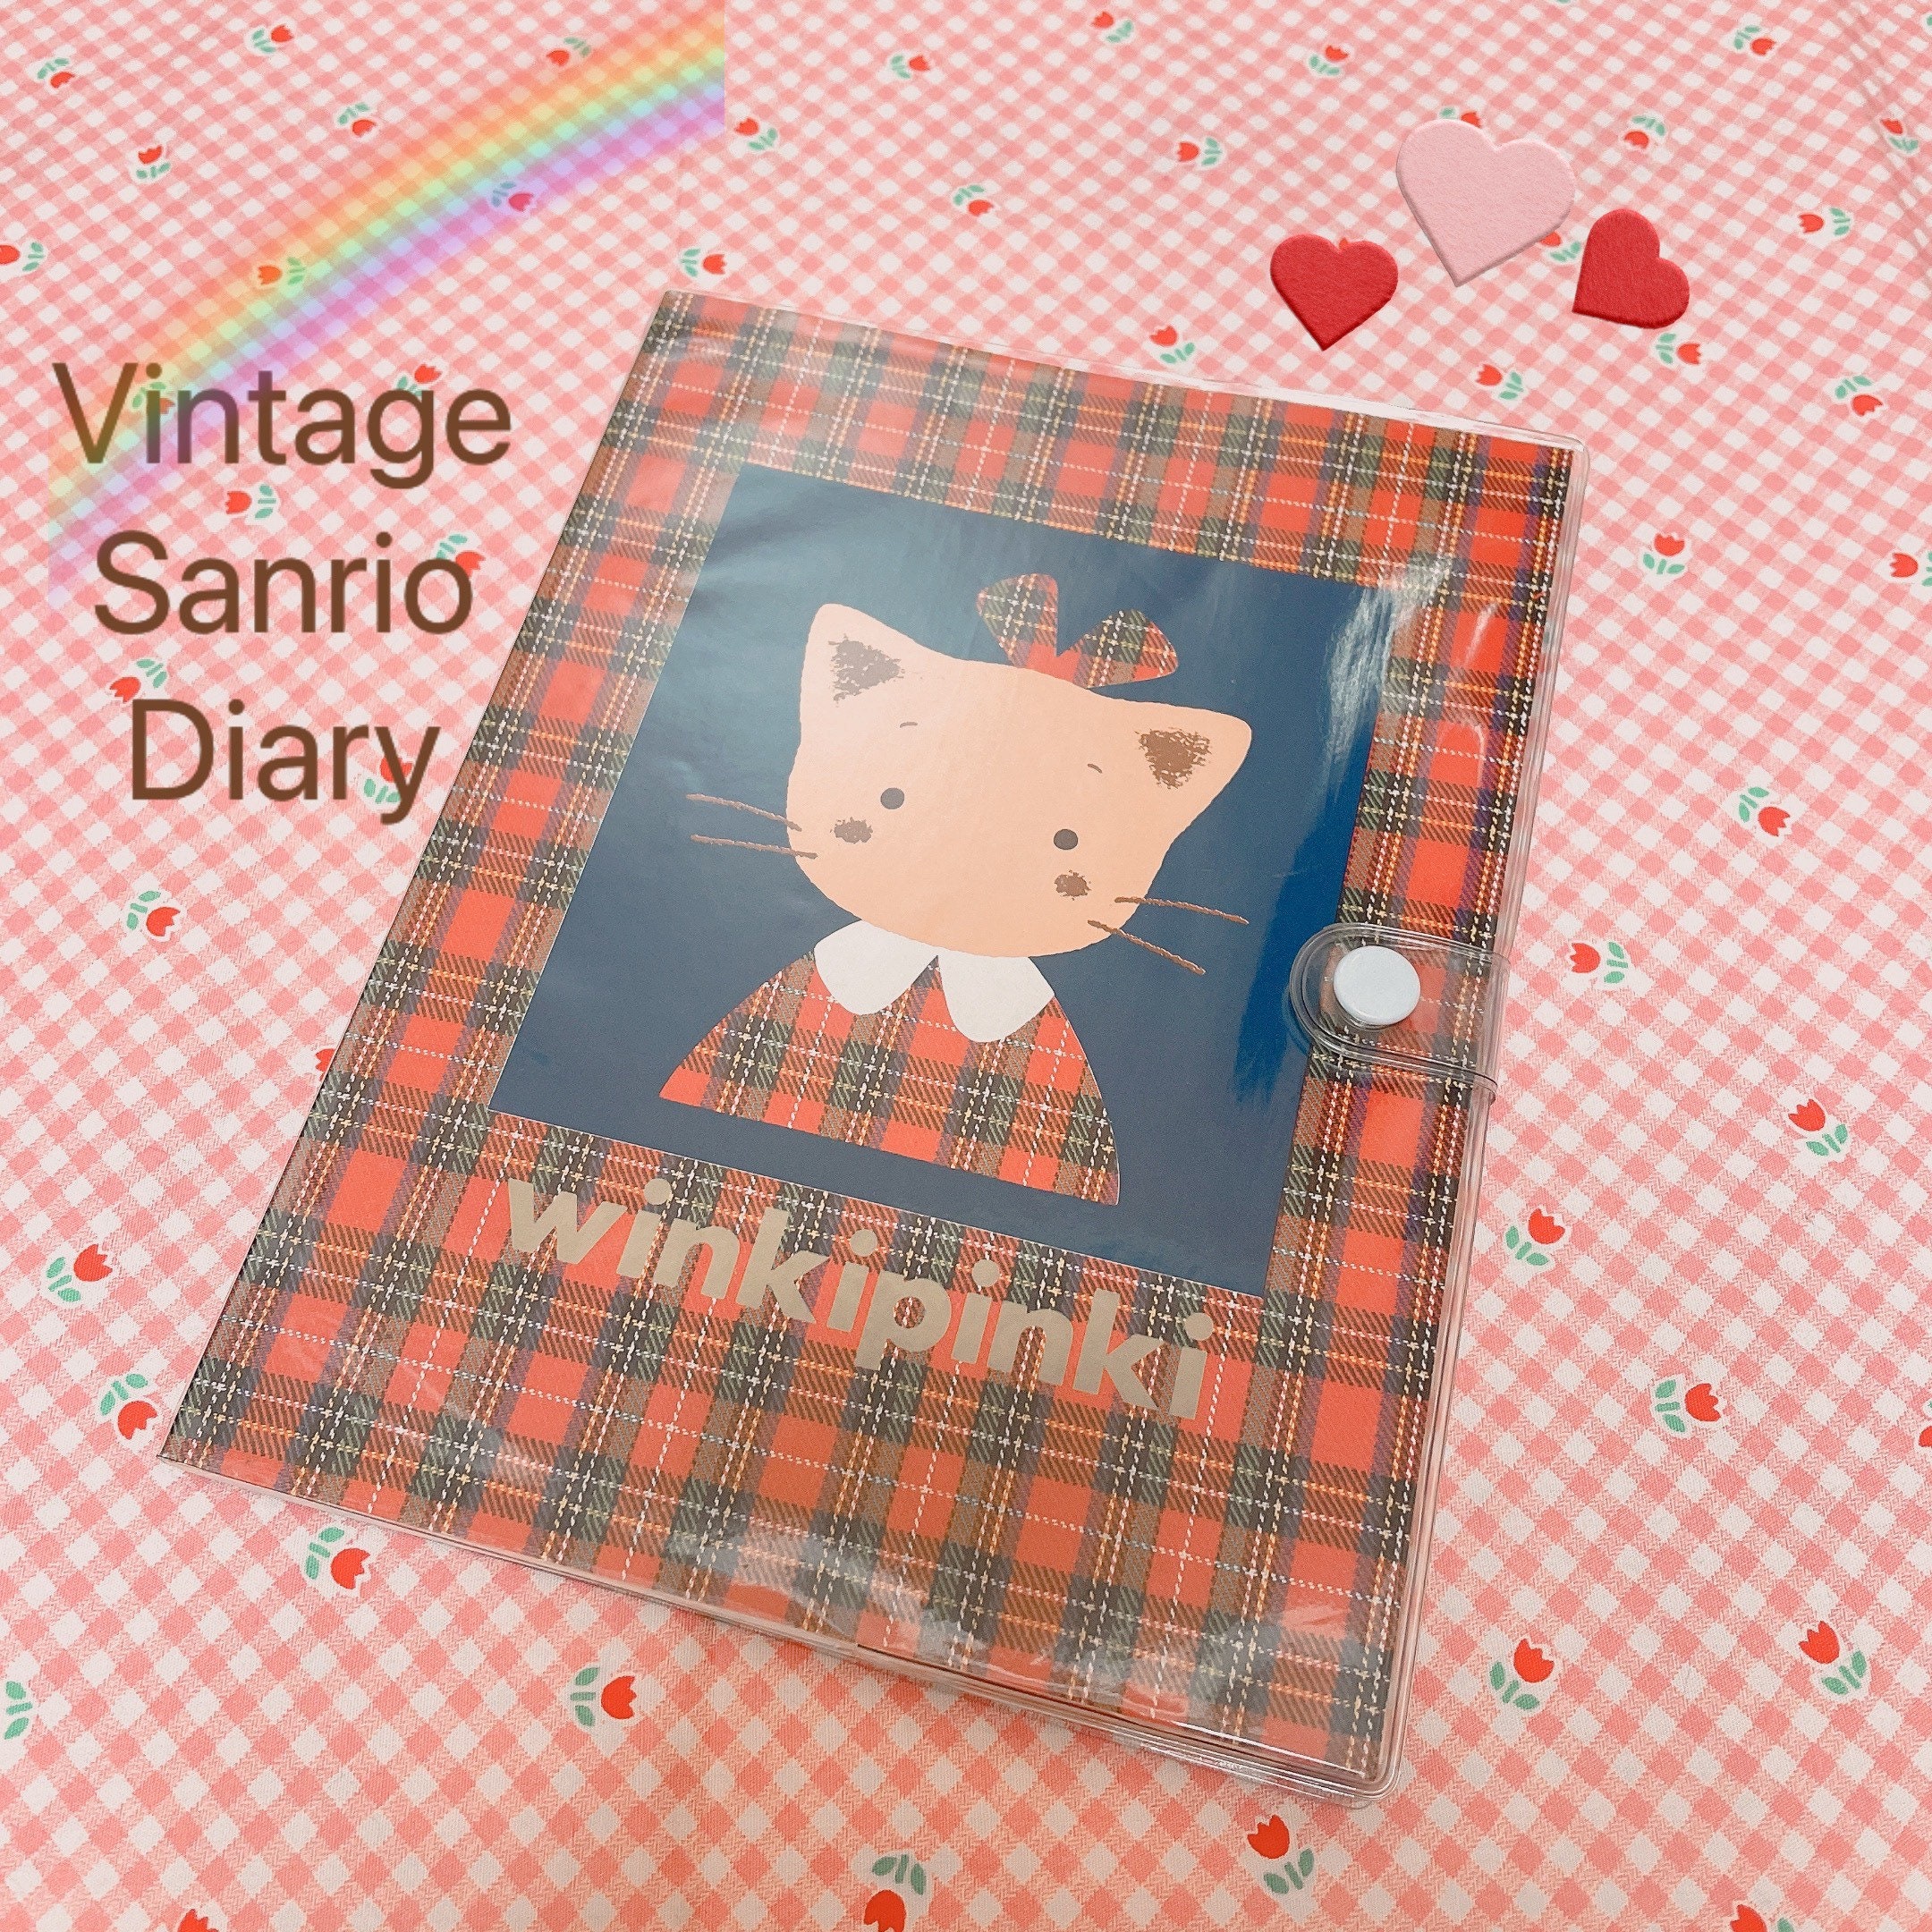 Free: Vintage & New Sanrio Mini Sticker Books!! My 1st tiered